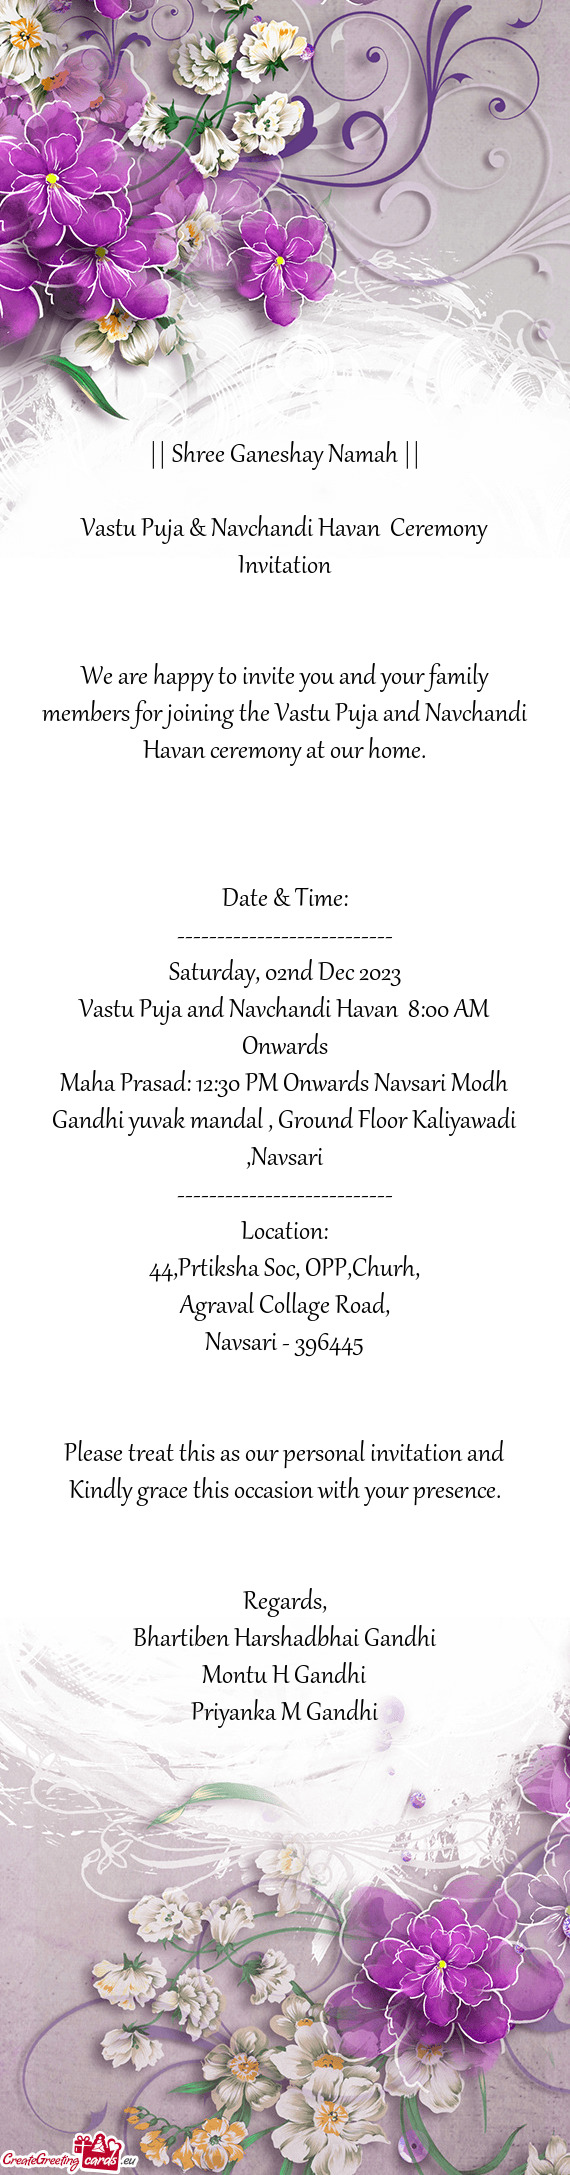 Vastu Puja & Navchandi Havan Ceremony Invitation